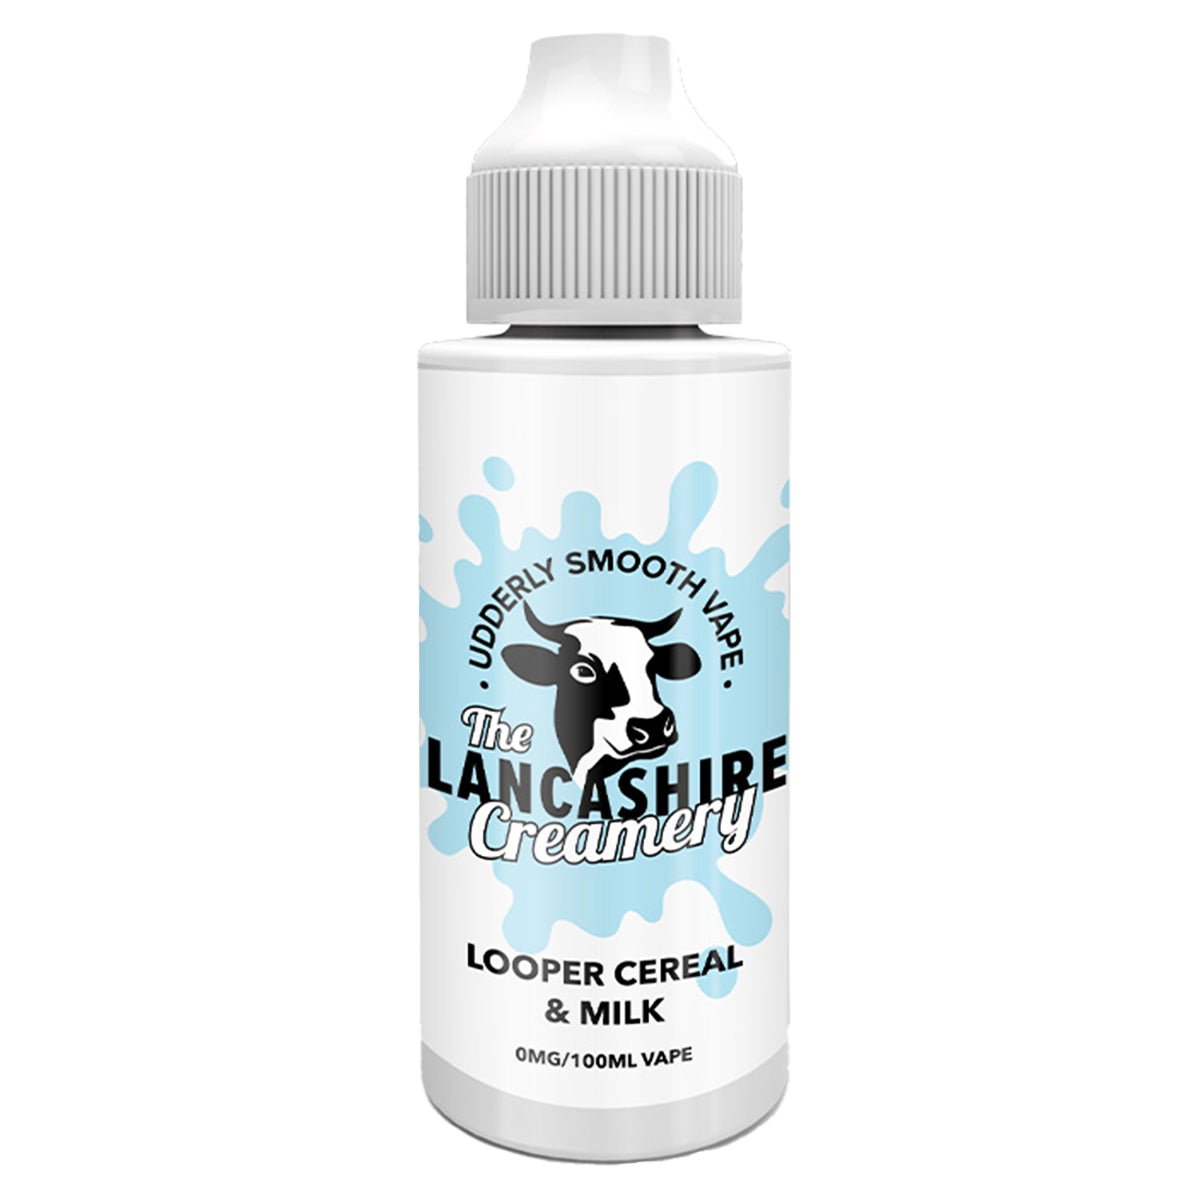 Looper Cereal & Milk 100ml Shortfill By The Lancashire Creamery - Prime Vapes UK